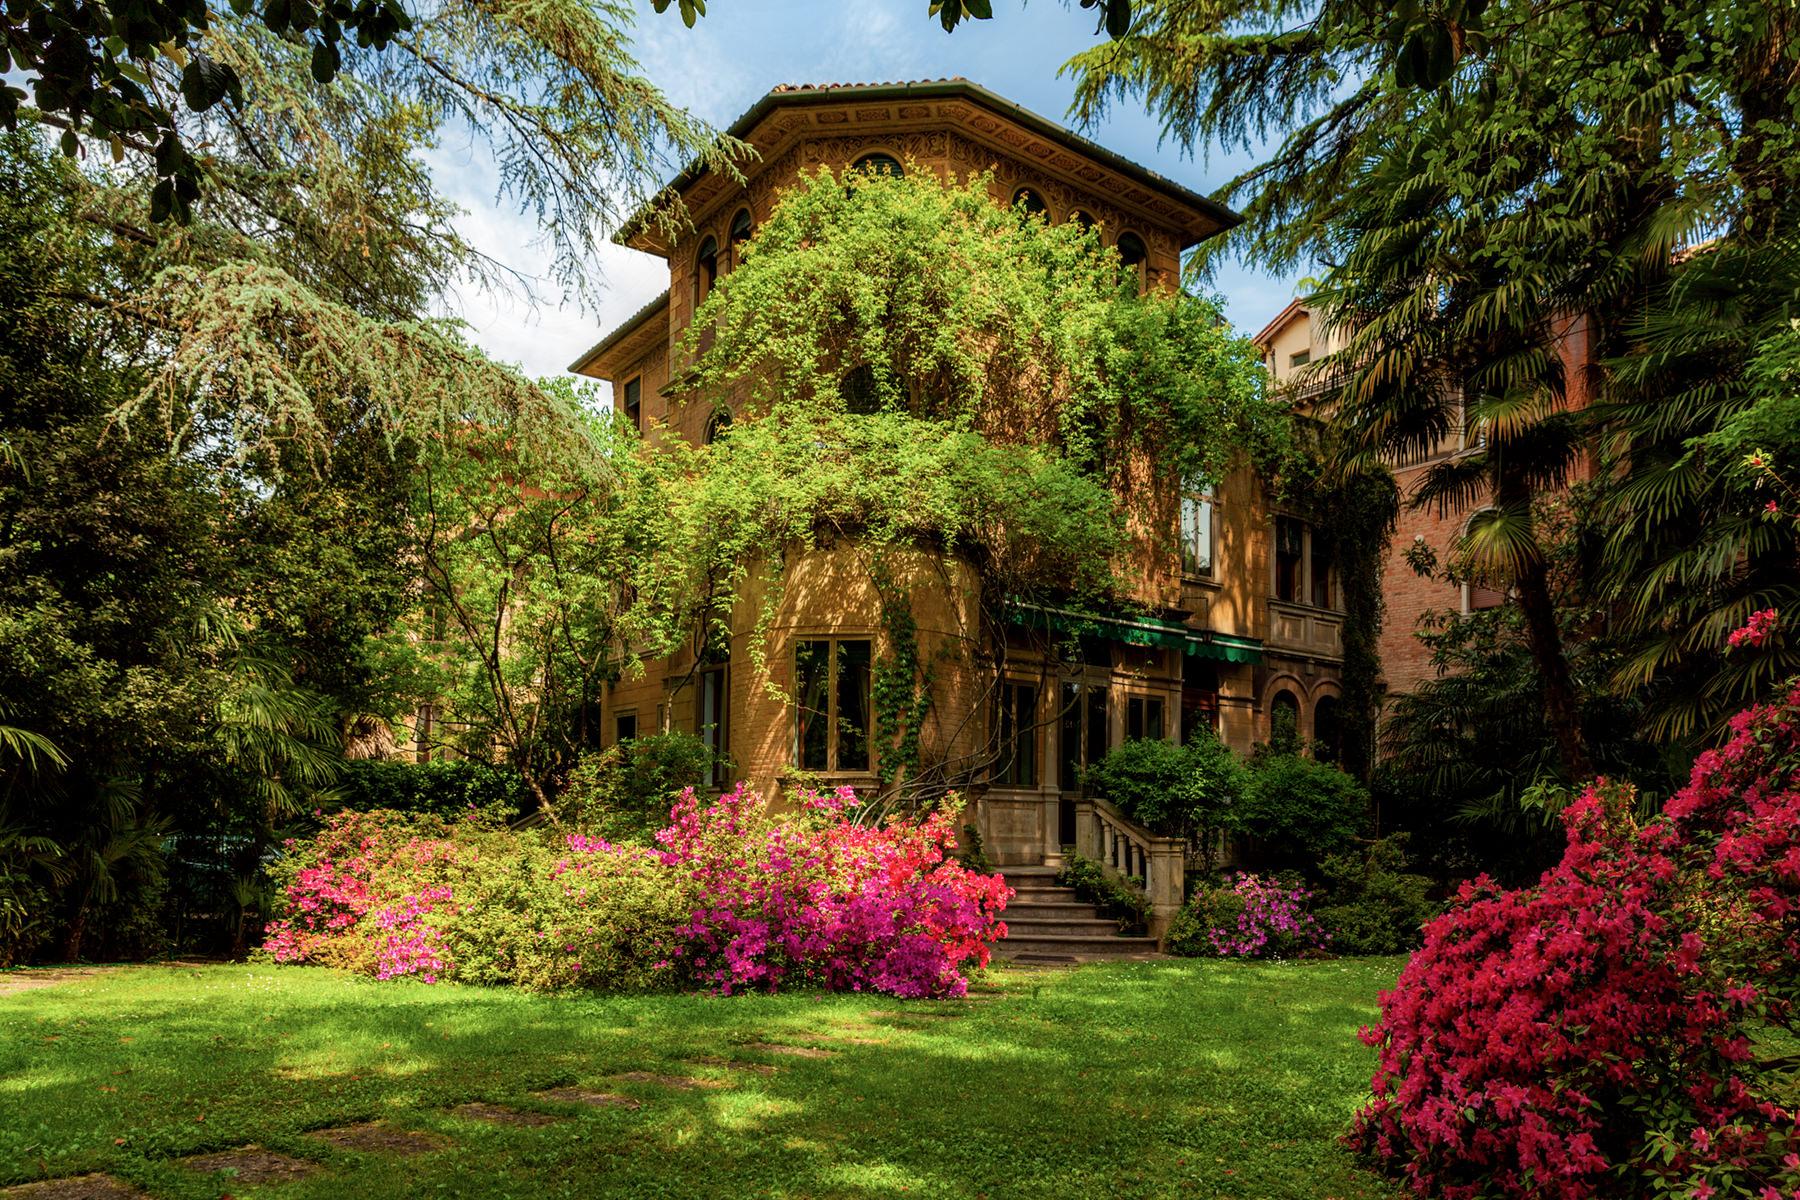 Wonderful Art Nouveau villa in the heart of Treviso - 1